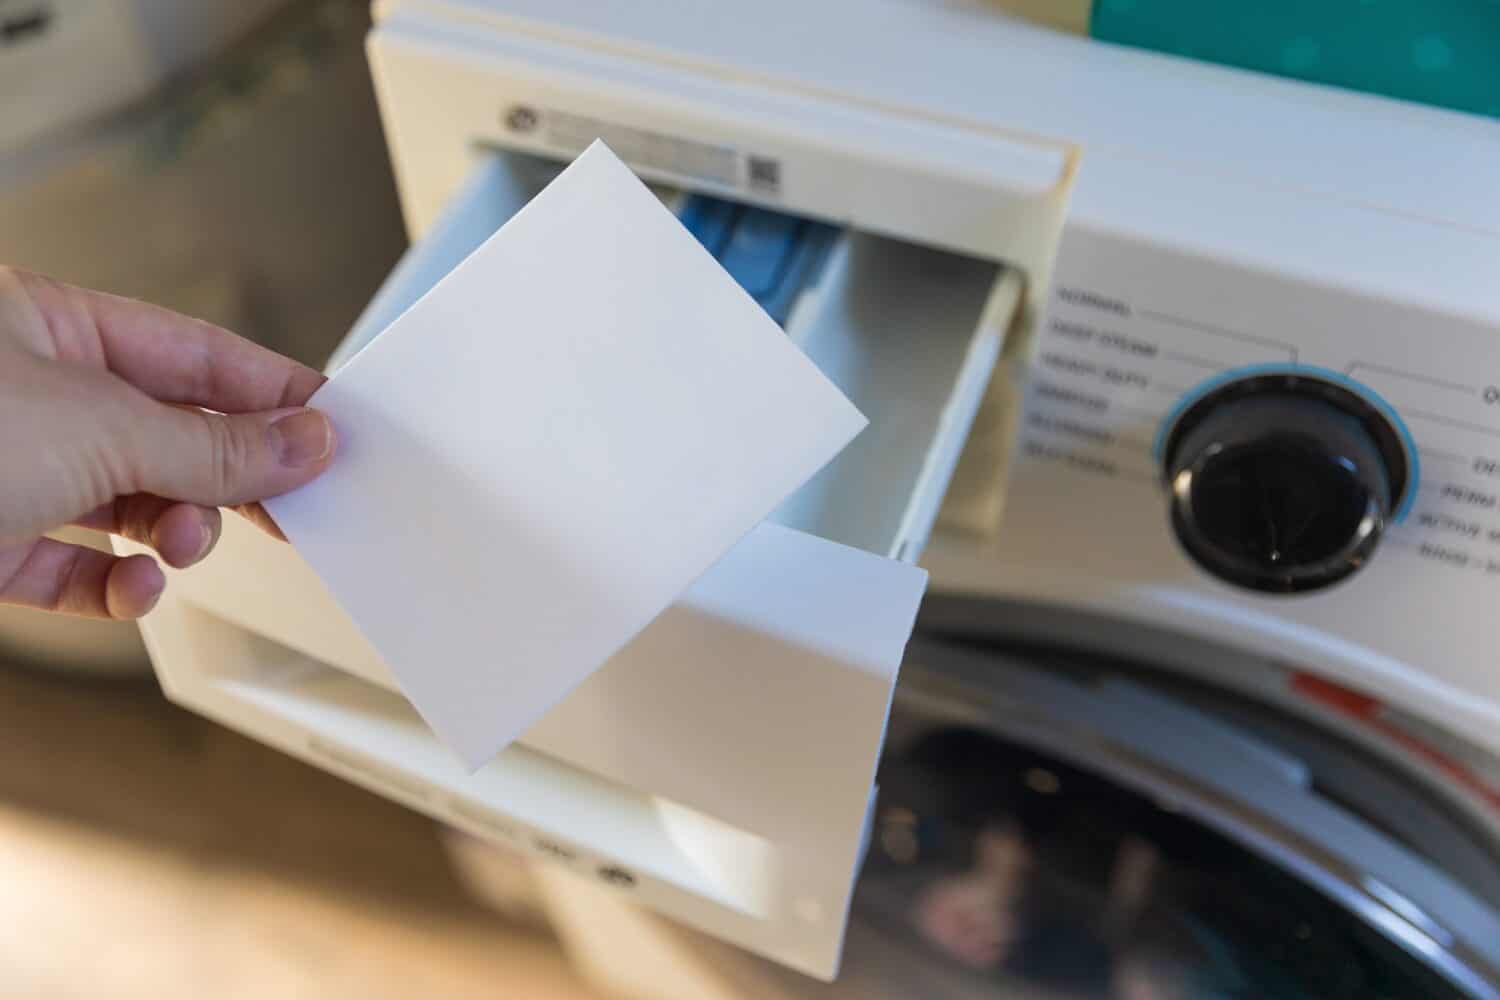 A woman putting a laundry sheet in a washing machine